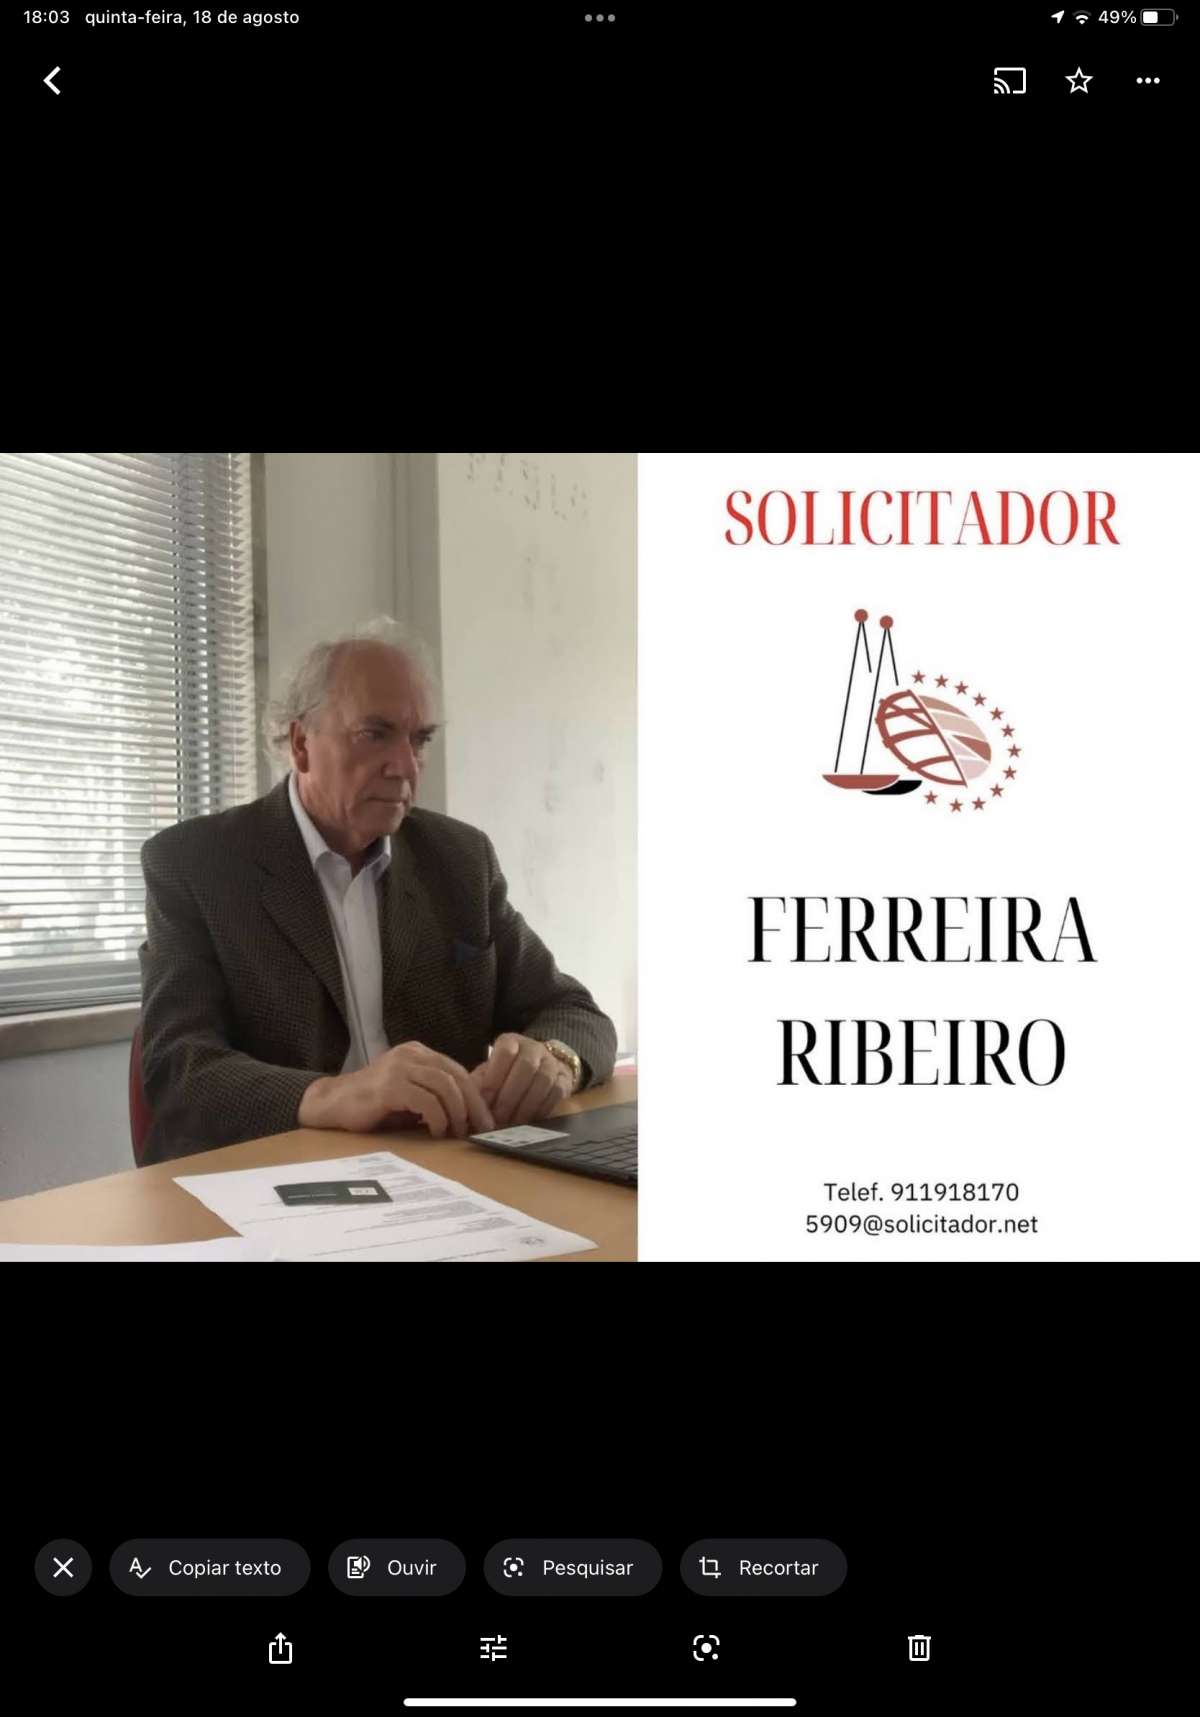 Solicitador FERREIRA RIBEIRO - Almada - Advogado de Patentes